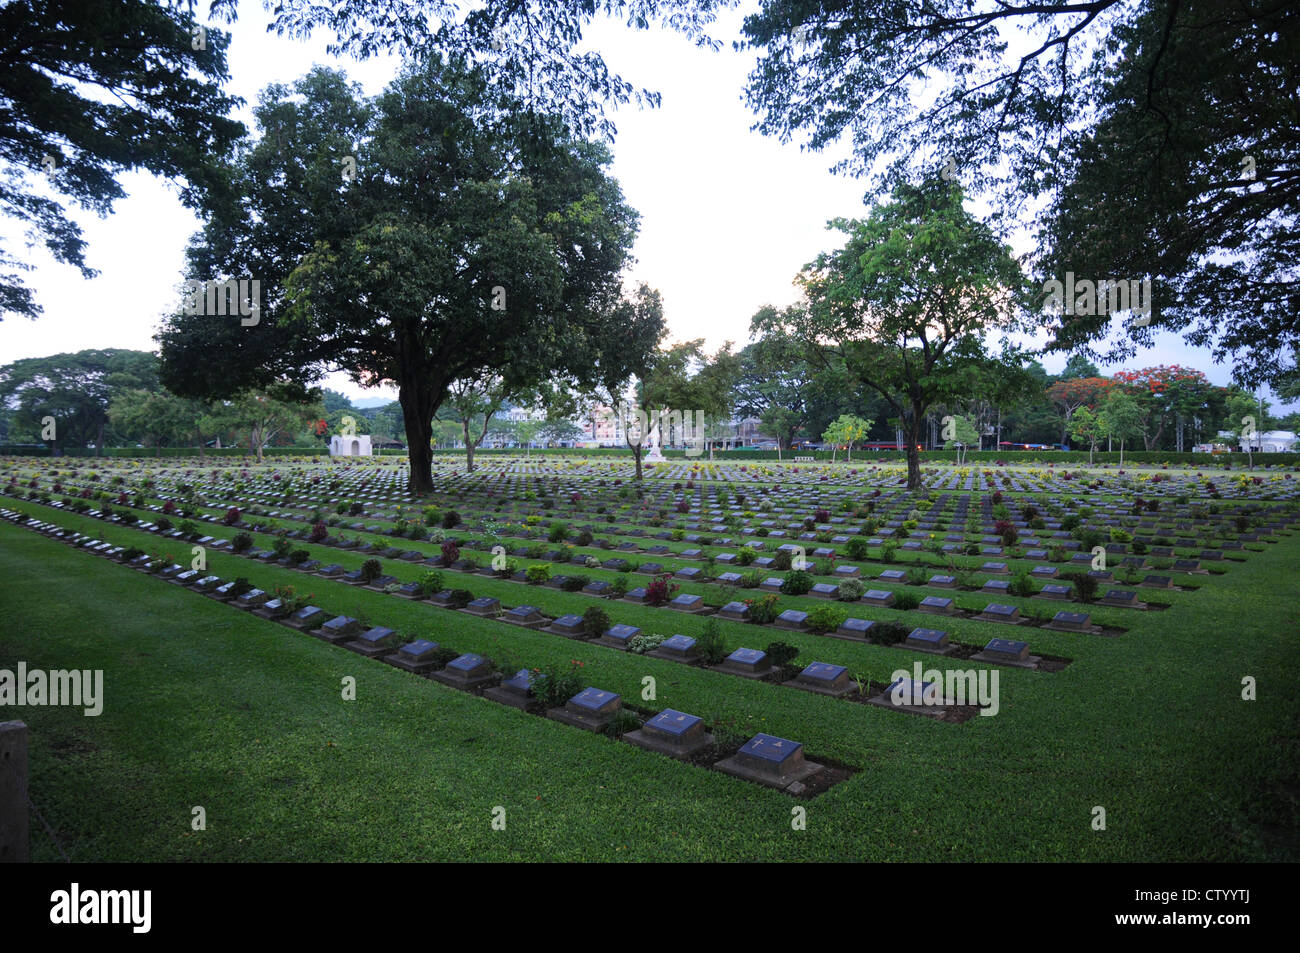 Allied war cemetery, clean, well cared for, green grass, trees, Kanchanaburi, Thailand. Stock Photo